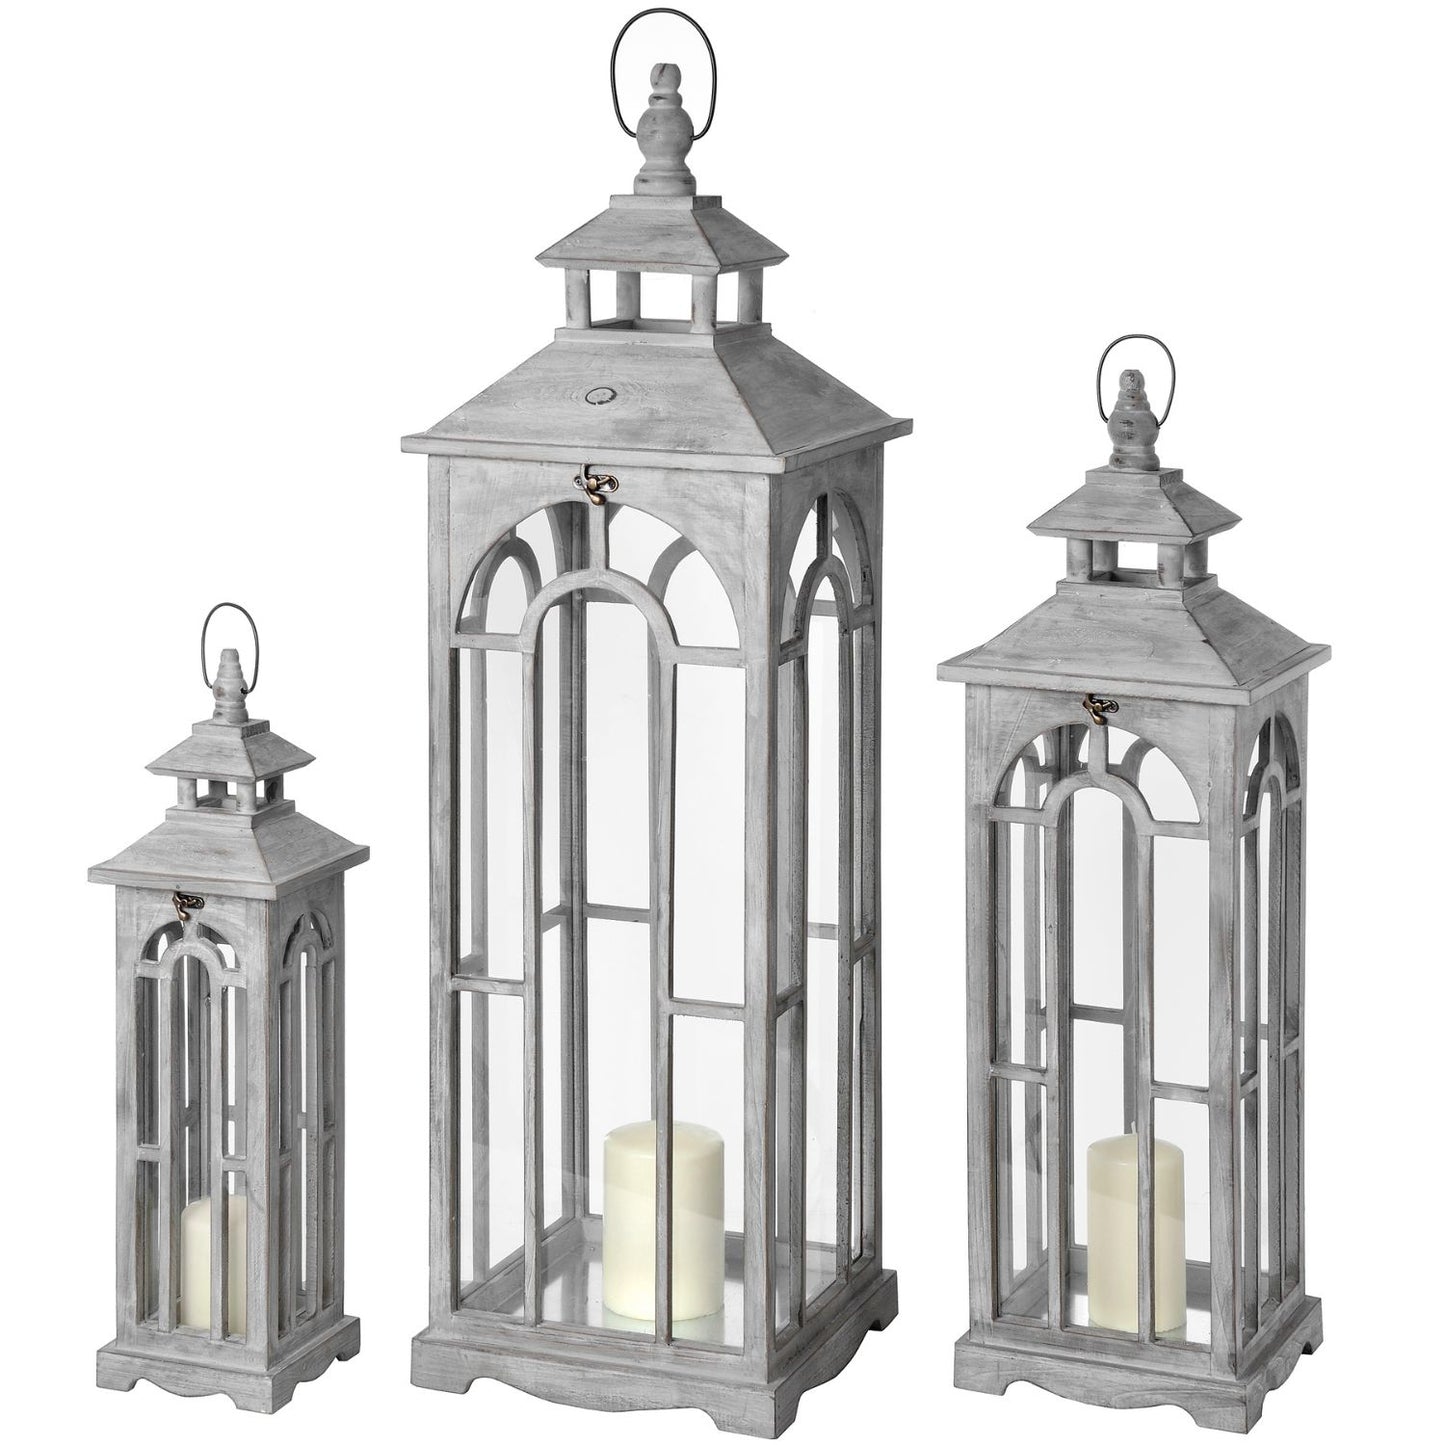 Three grey lanterns with archway design and white wash finish